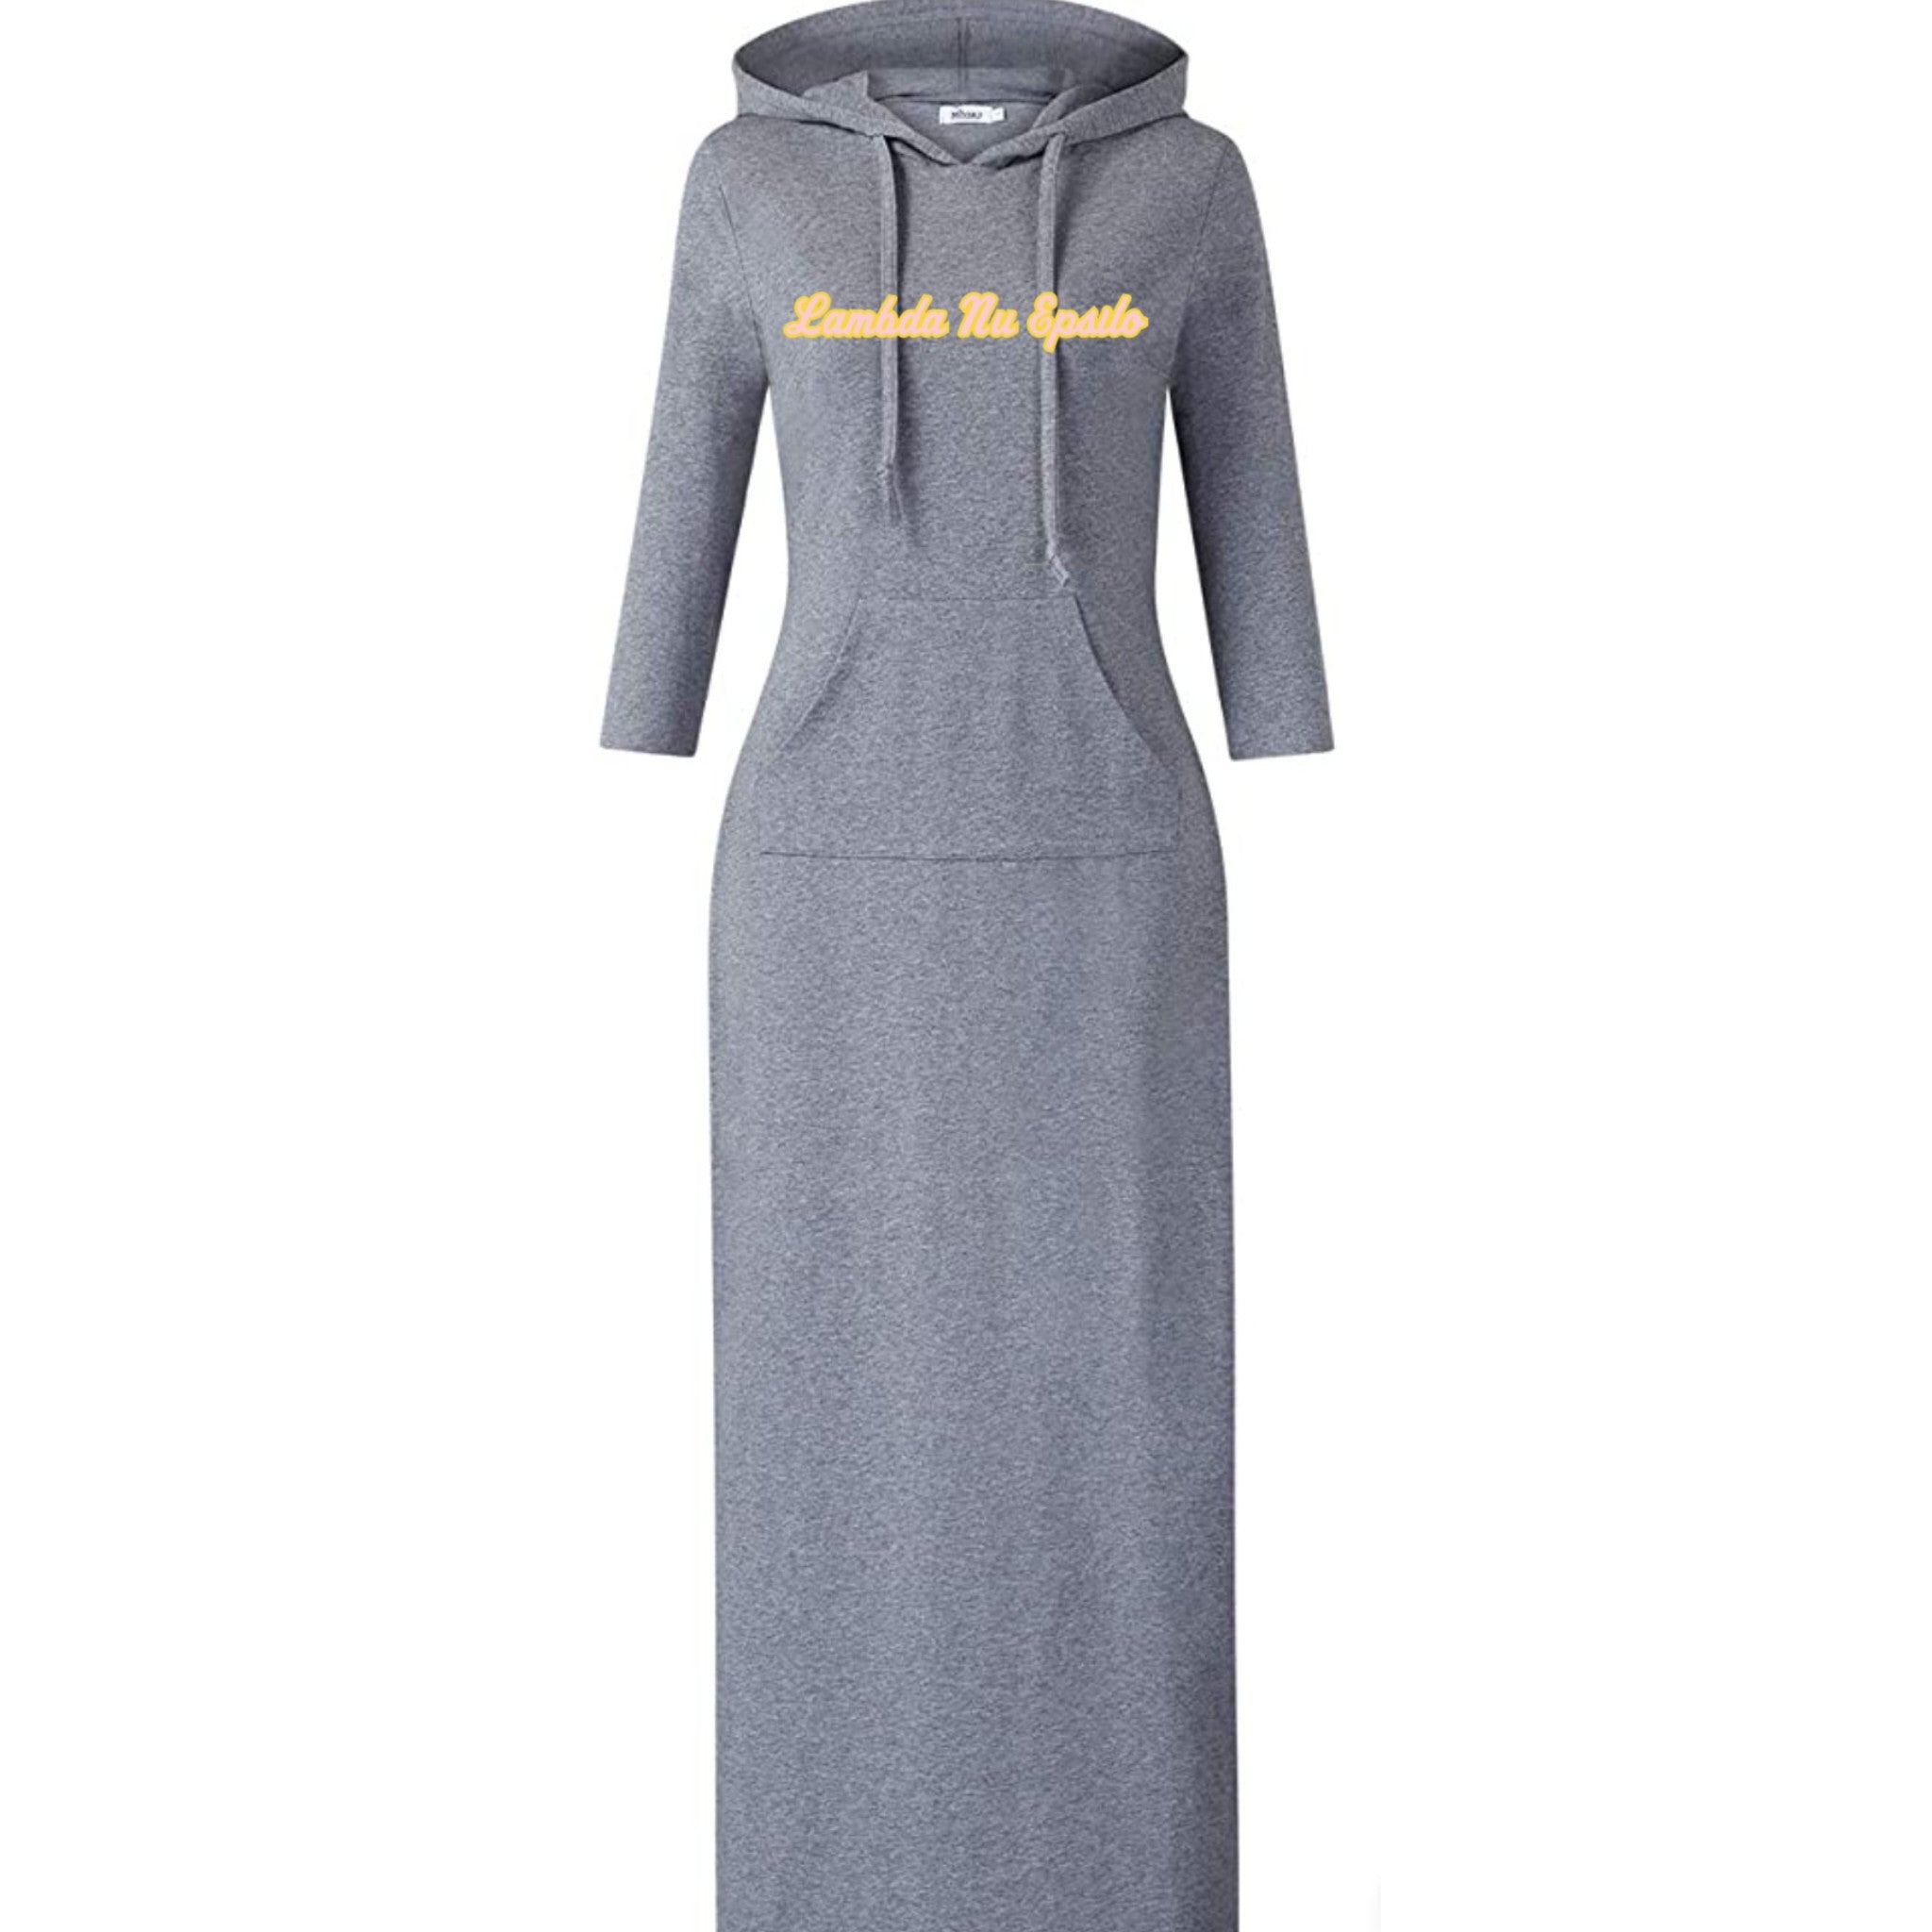 Lambda Nu Epsilon hoodie dress